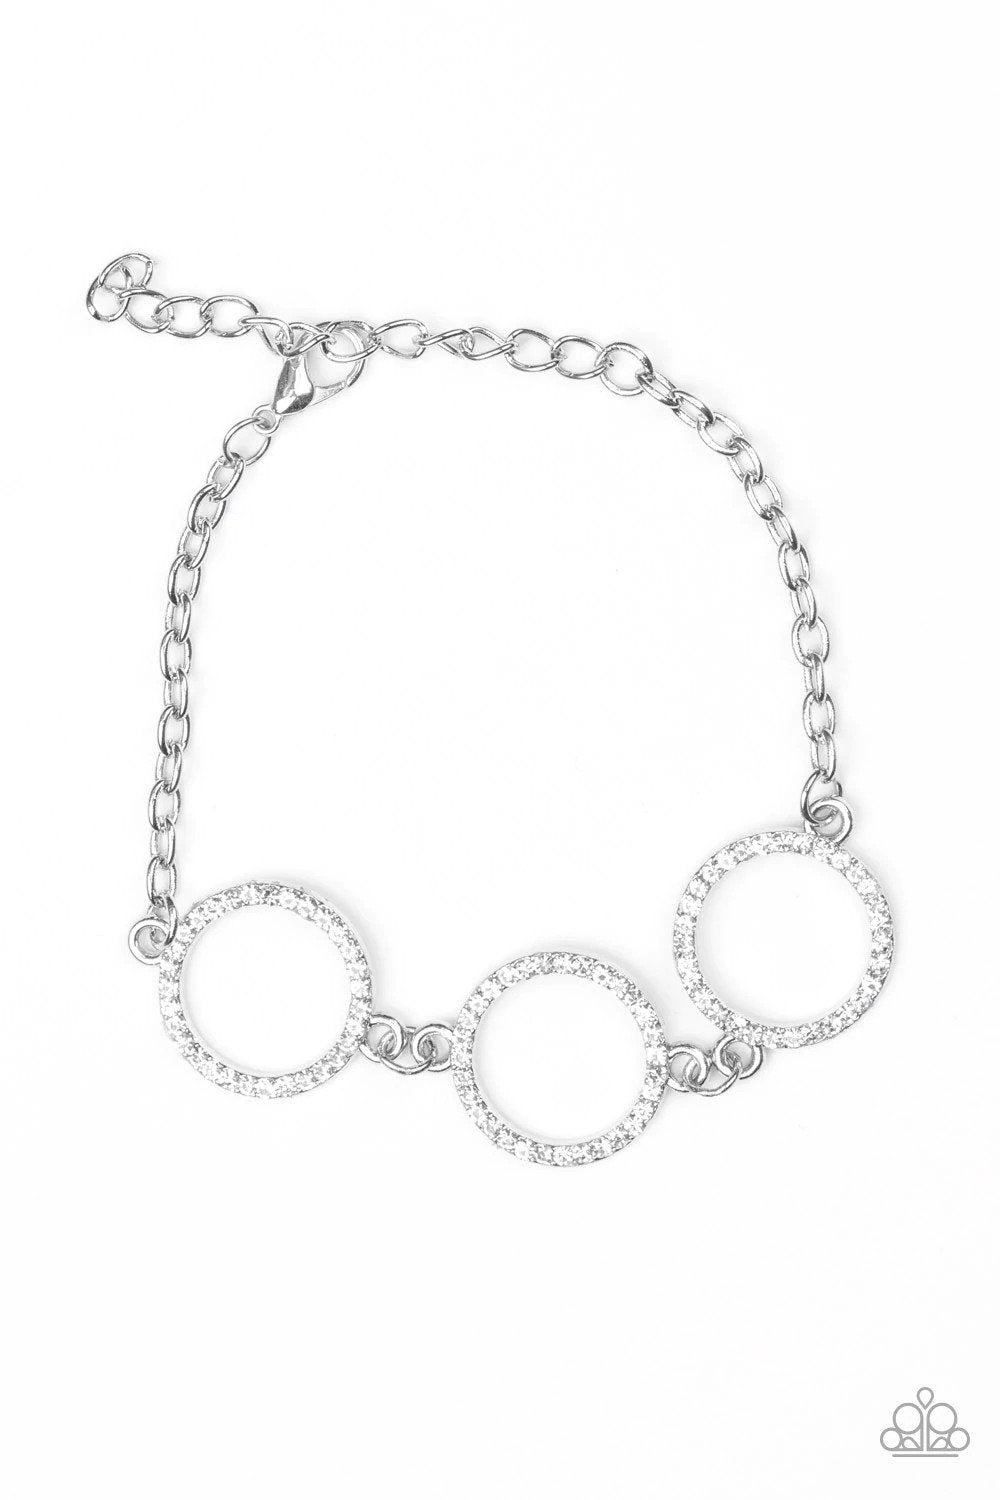 Dress The Part White Bracelet - Paparazzi Accessories- lightbox - CarasShop.com - $5 Jewelry by Cara Jewels